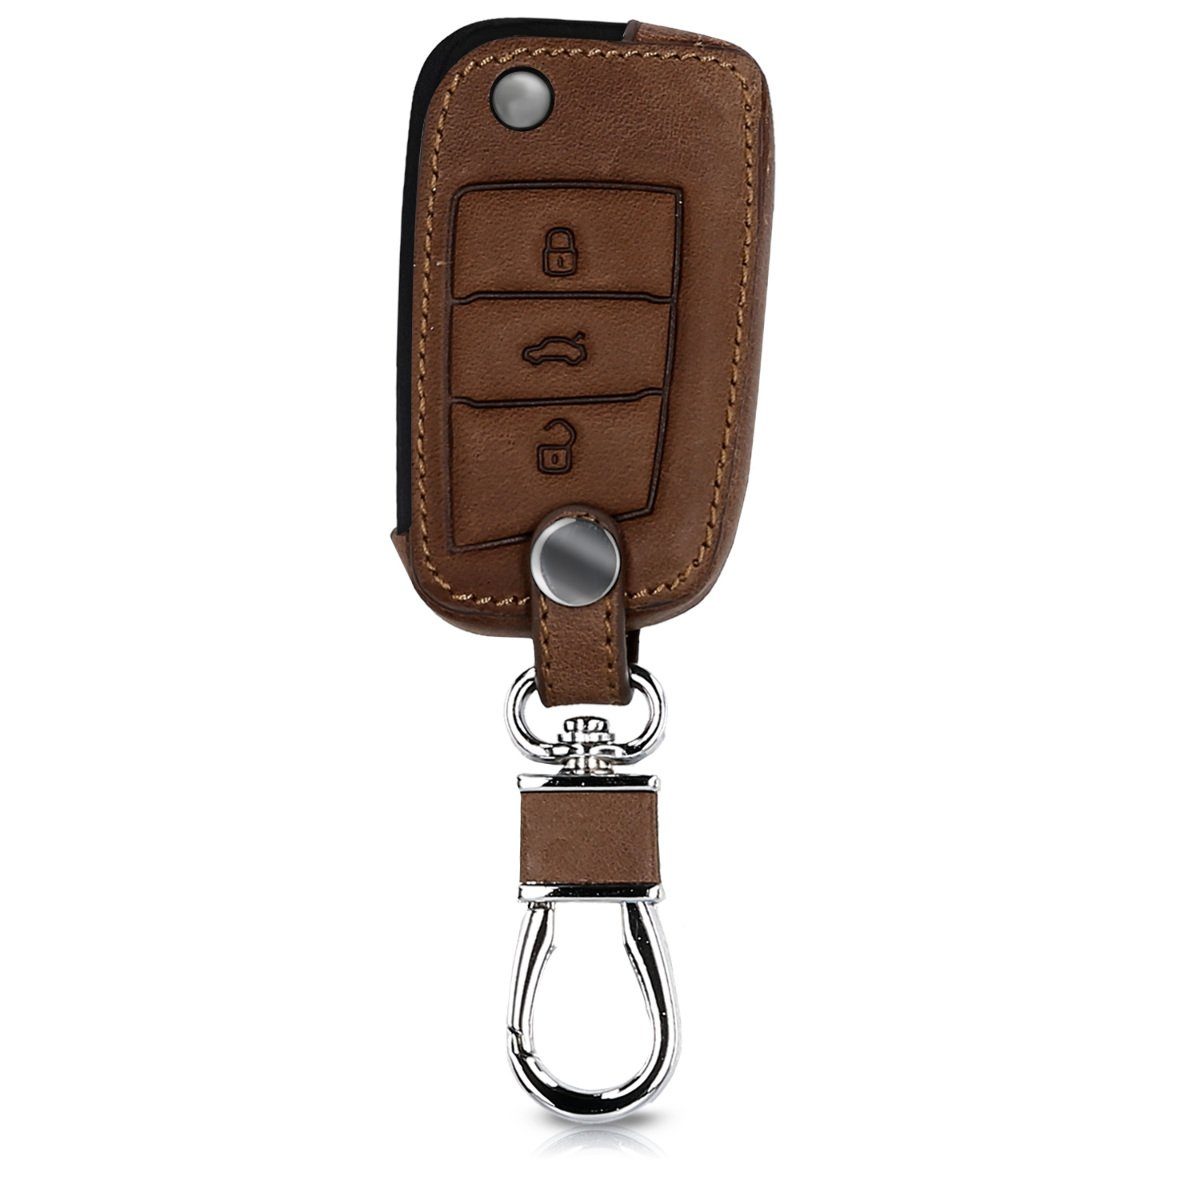 Alu Schlüssel Cover für Volkswagen, Skoda, Seat Schlüssel inkl. Leder,  19,95 €